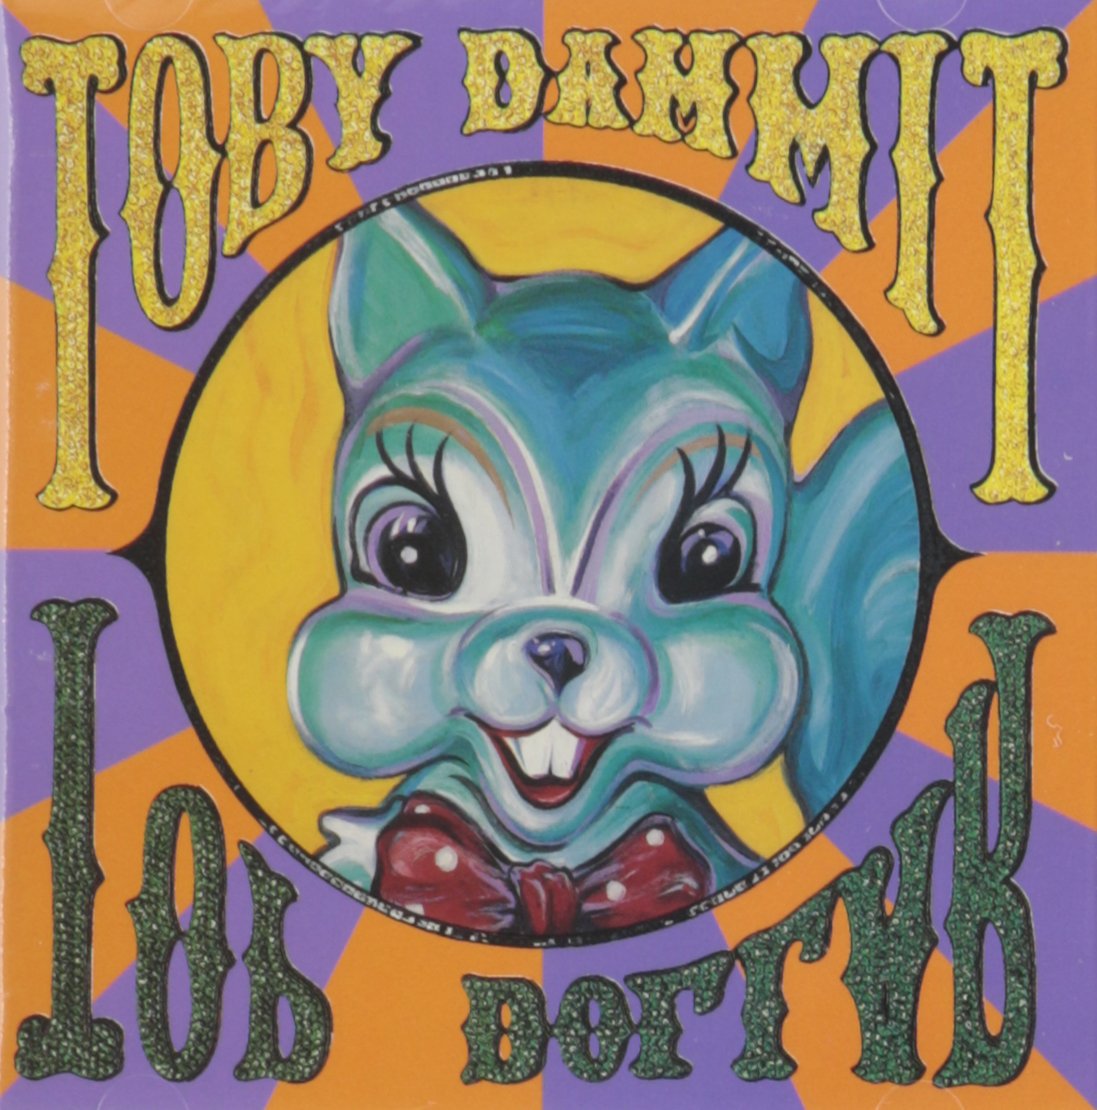 Toby Dammit- Top Dollar - Darkside Records